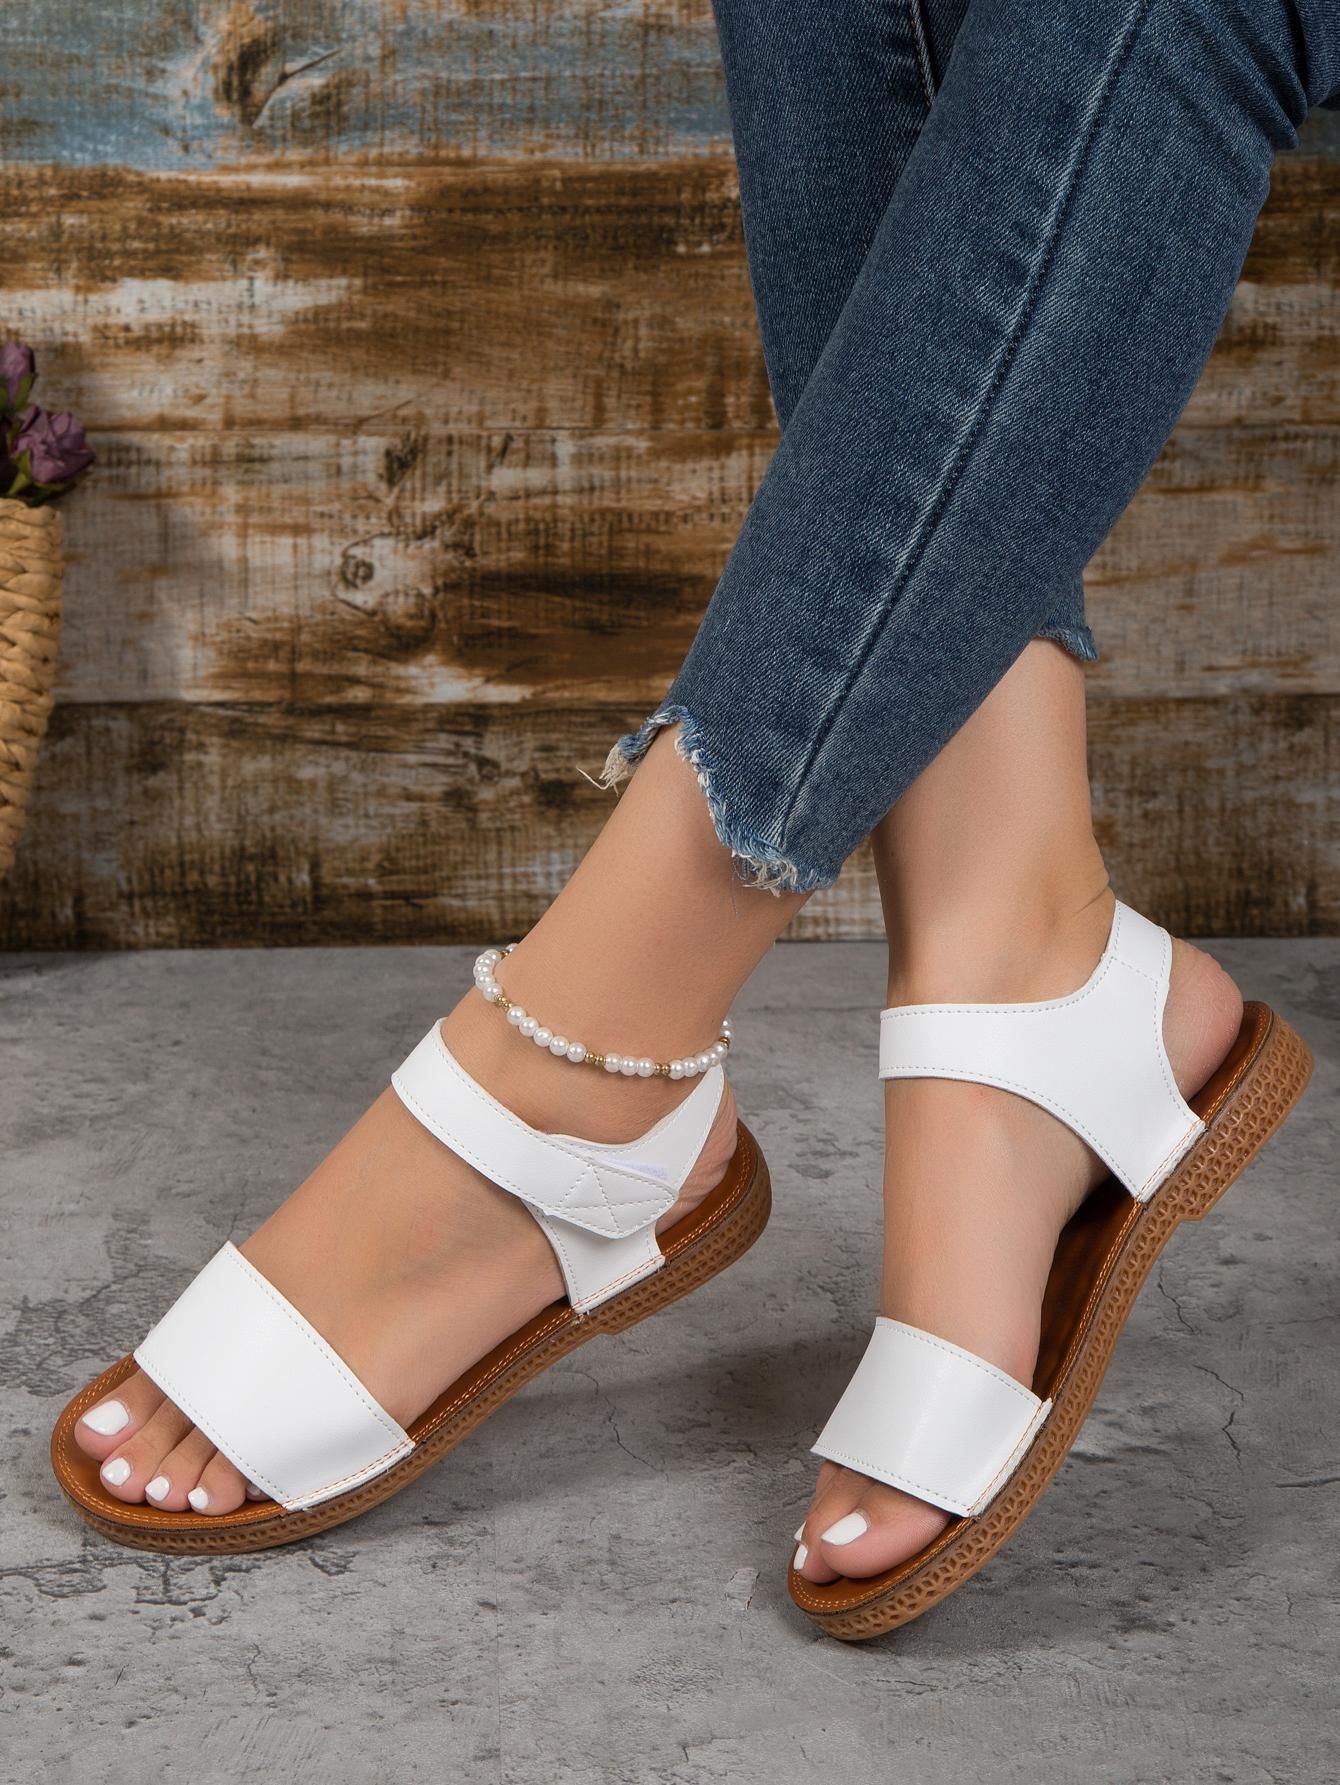 Elegant Ankle Strap Sandals For Women, Stitch Detail Flat Sandals | SHEIN